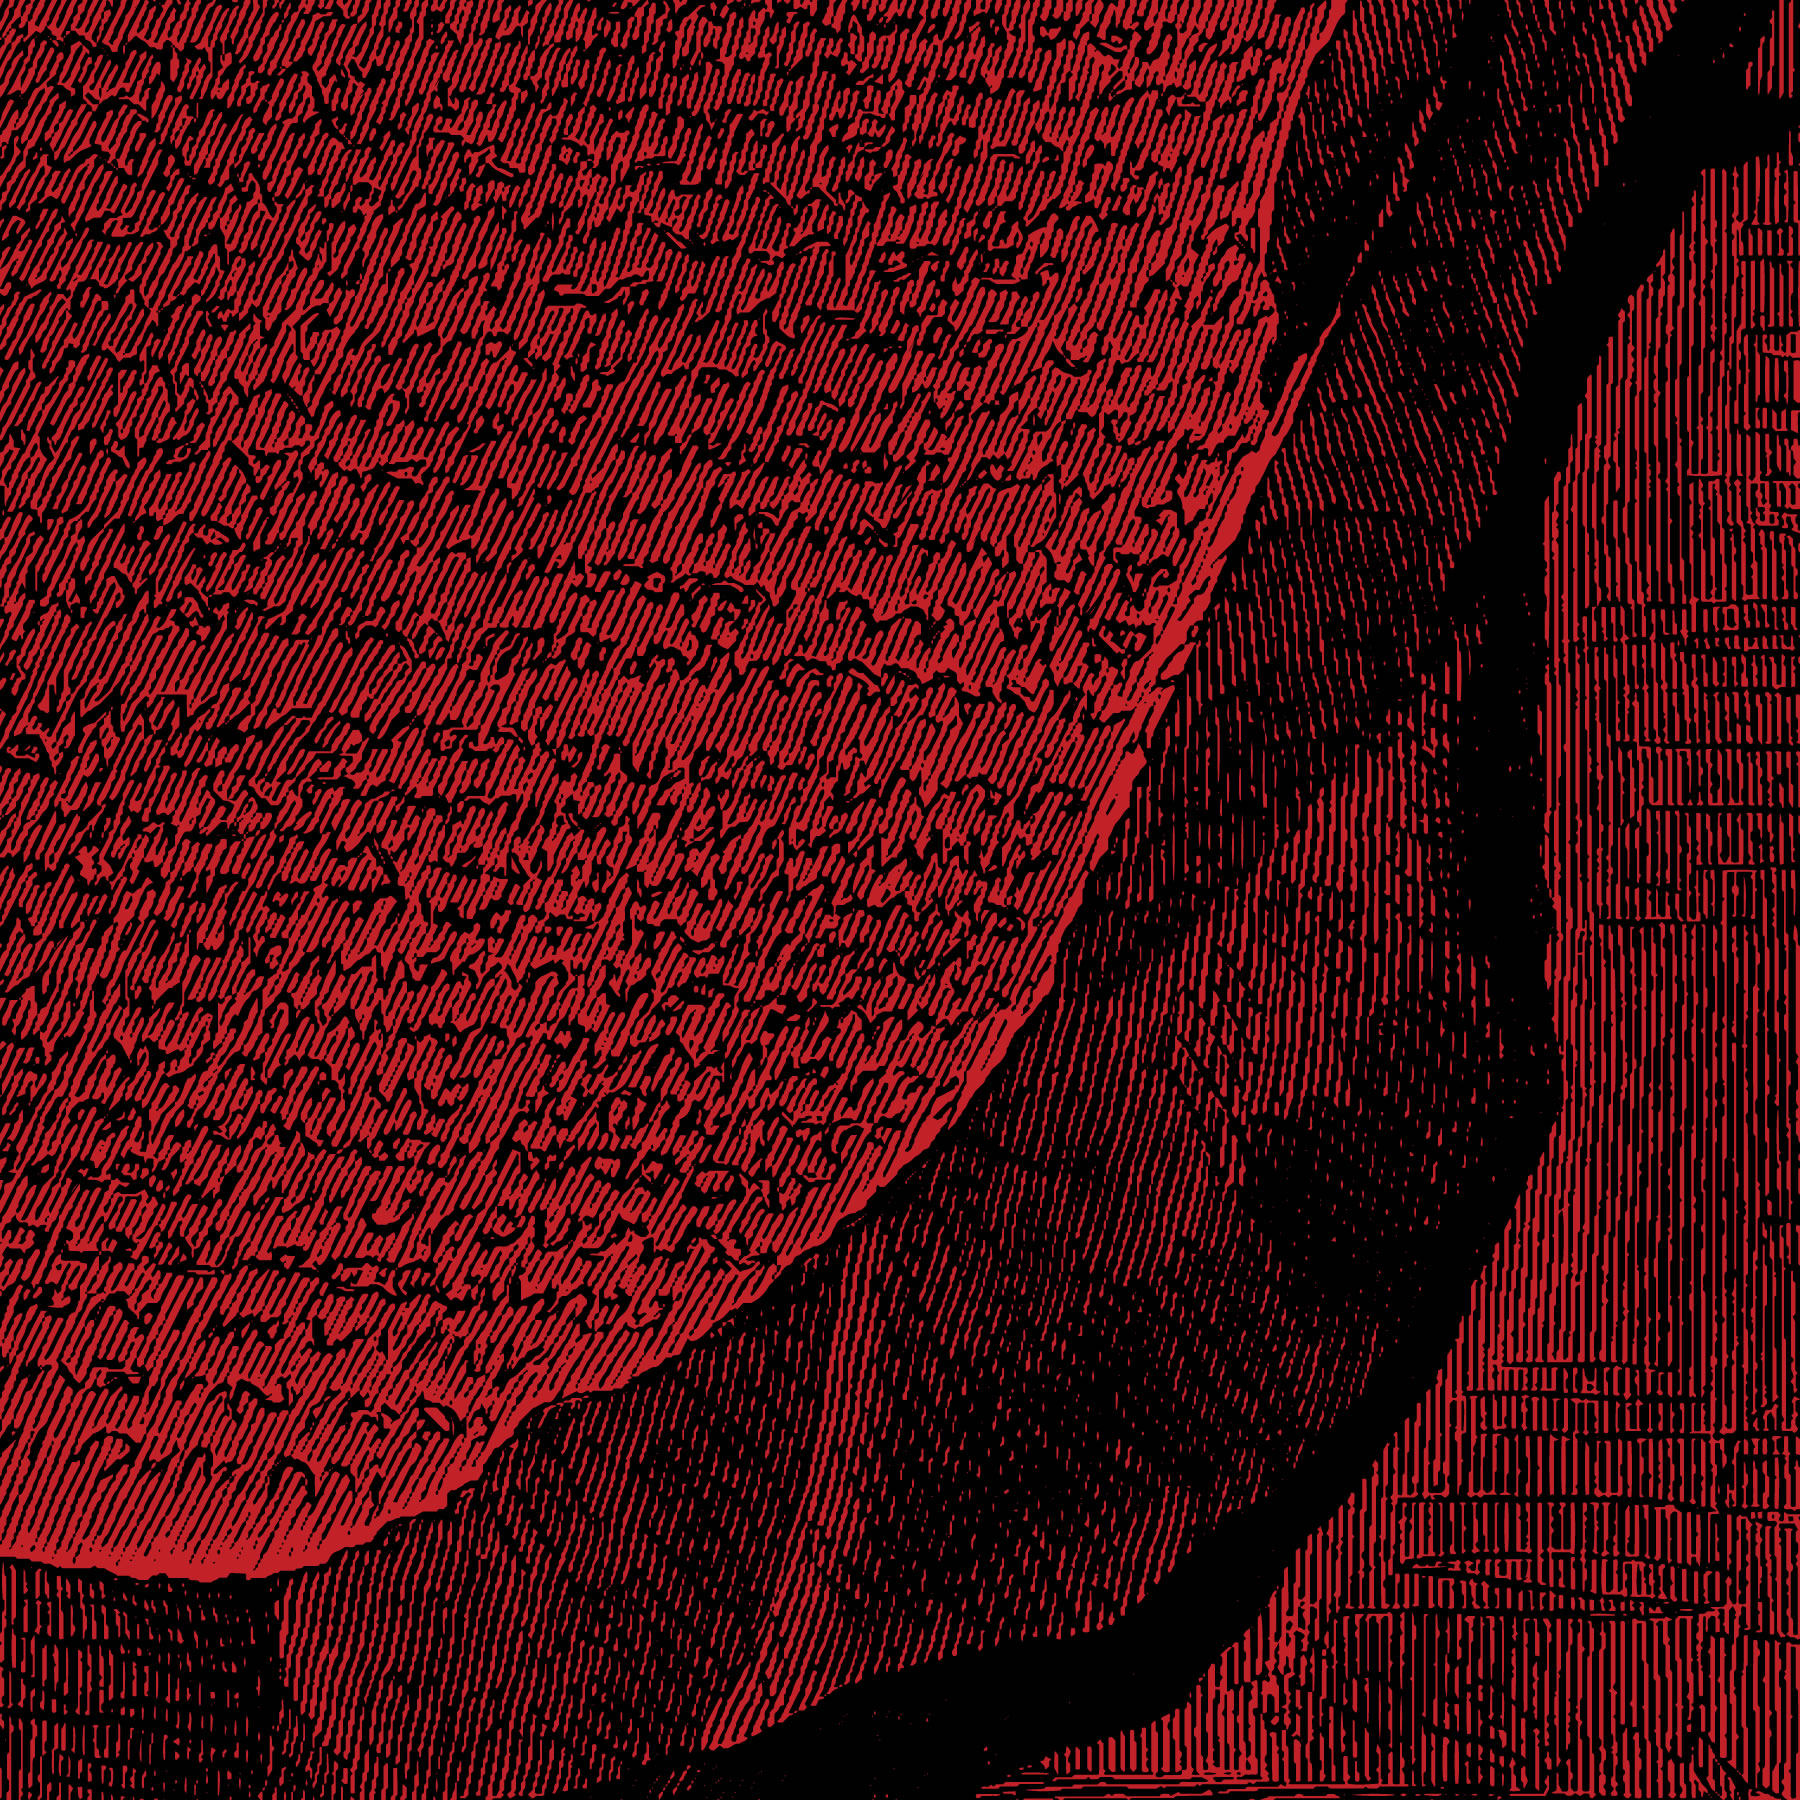 an illustration of the Rosetta Stone